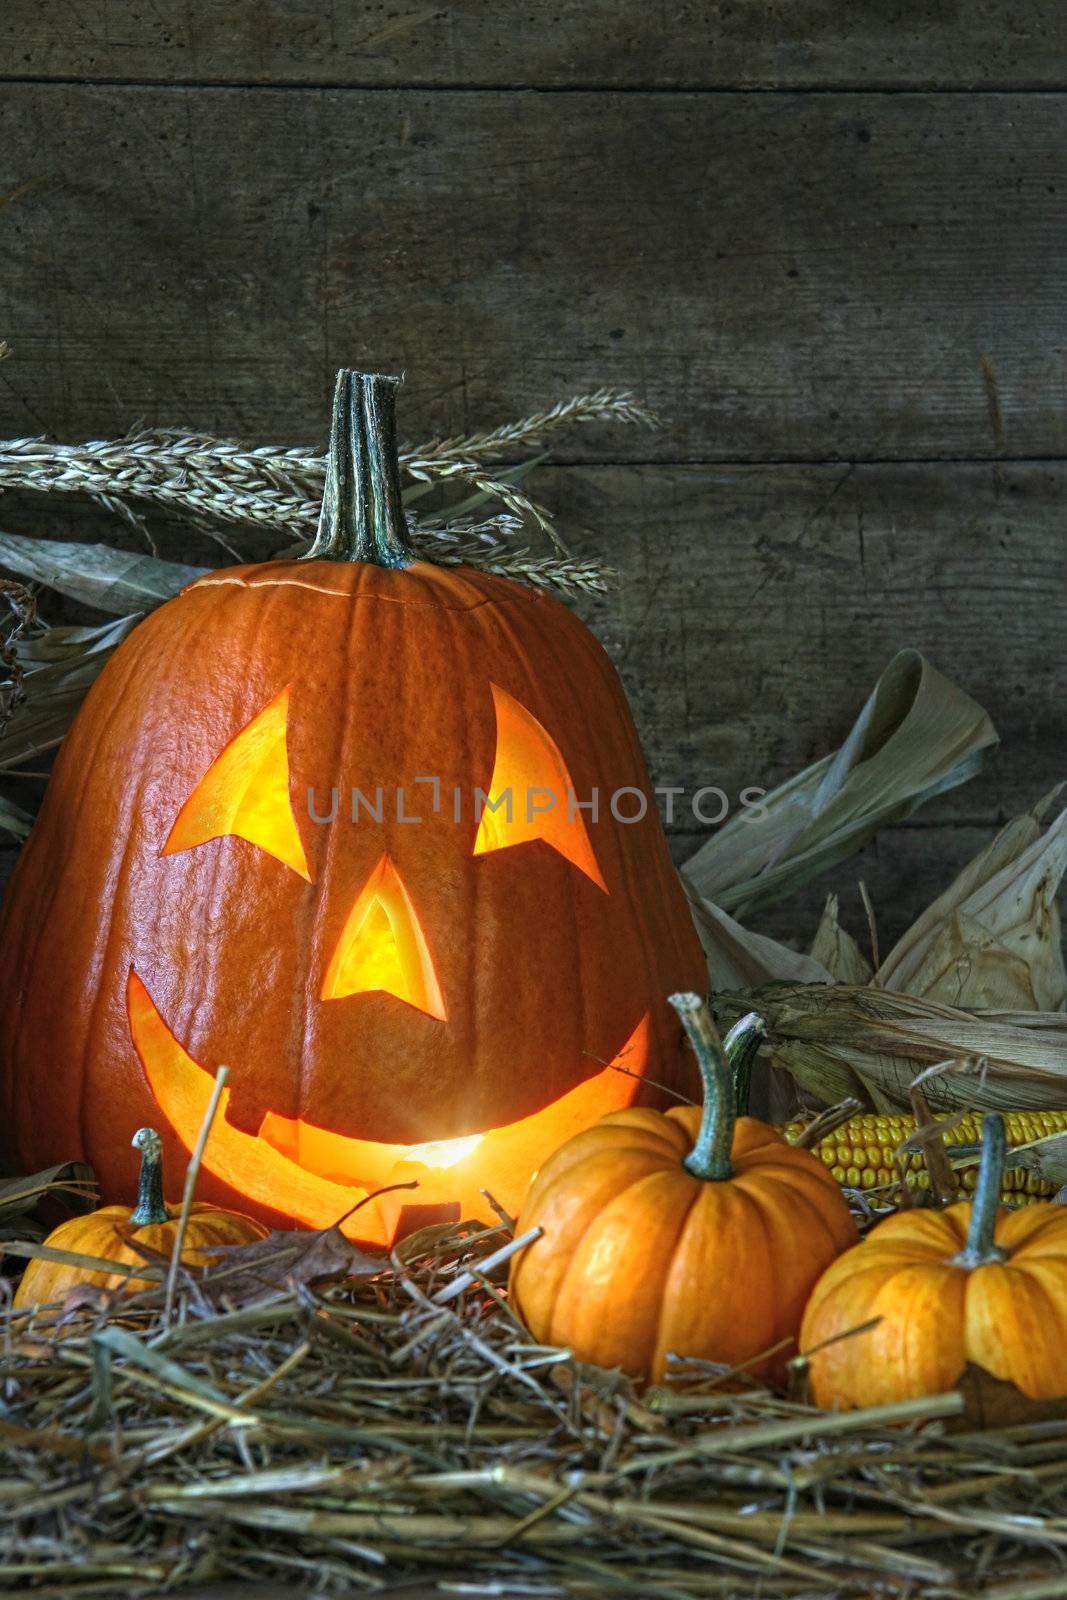 Carved jack-o-lantern lit for Halloween by Sandralise